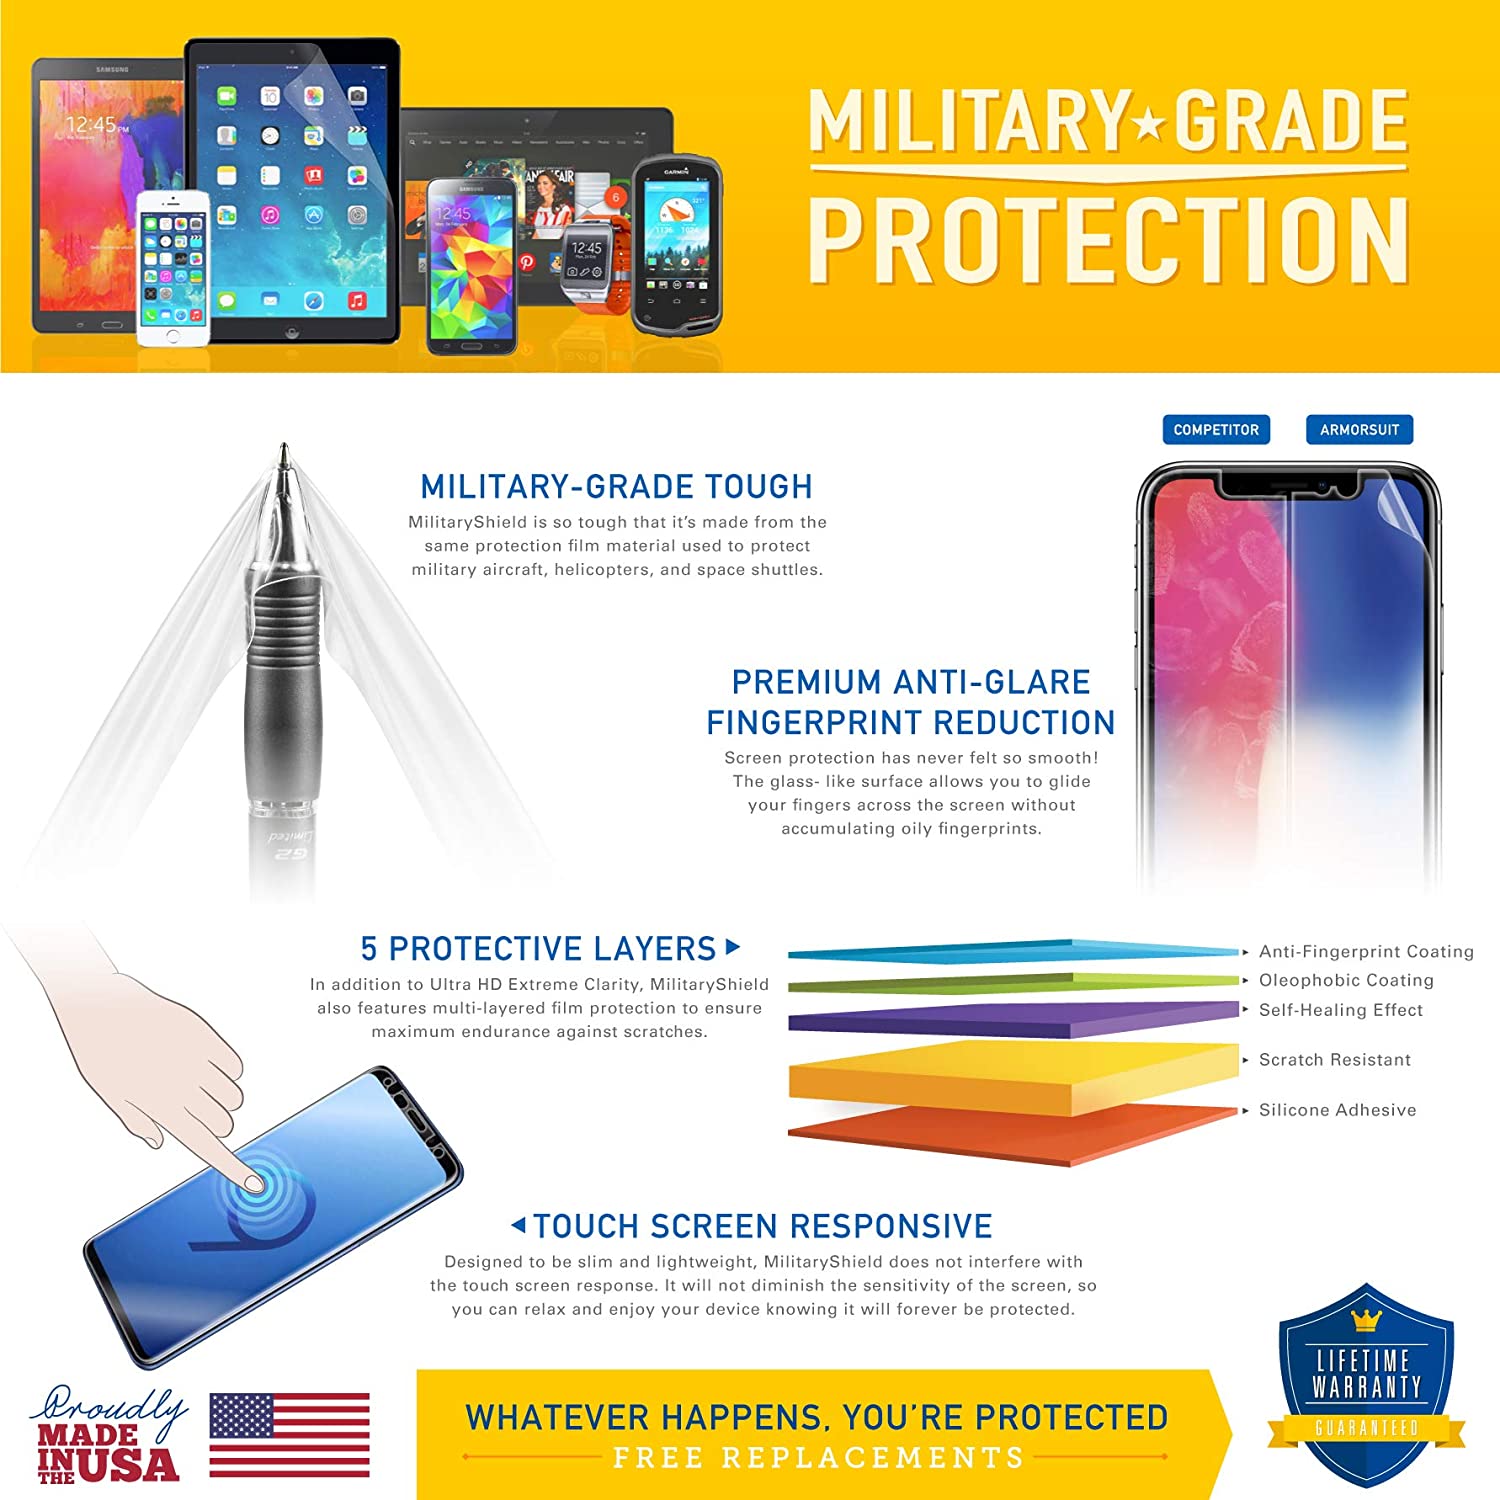 T-Mobile Prism Screen Protector + Black Carbon Fiber Skin Protector